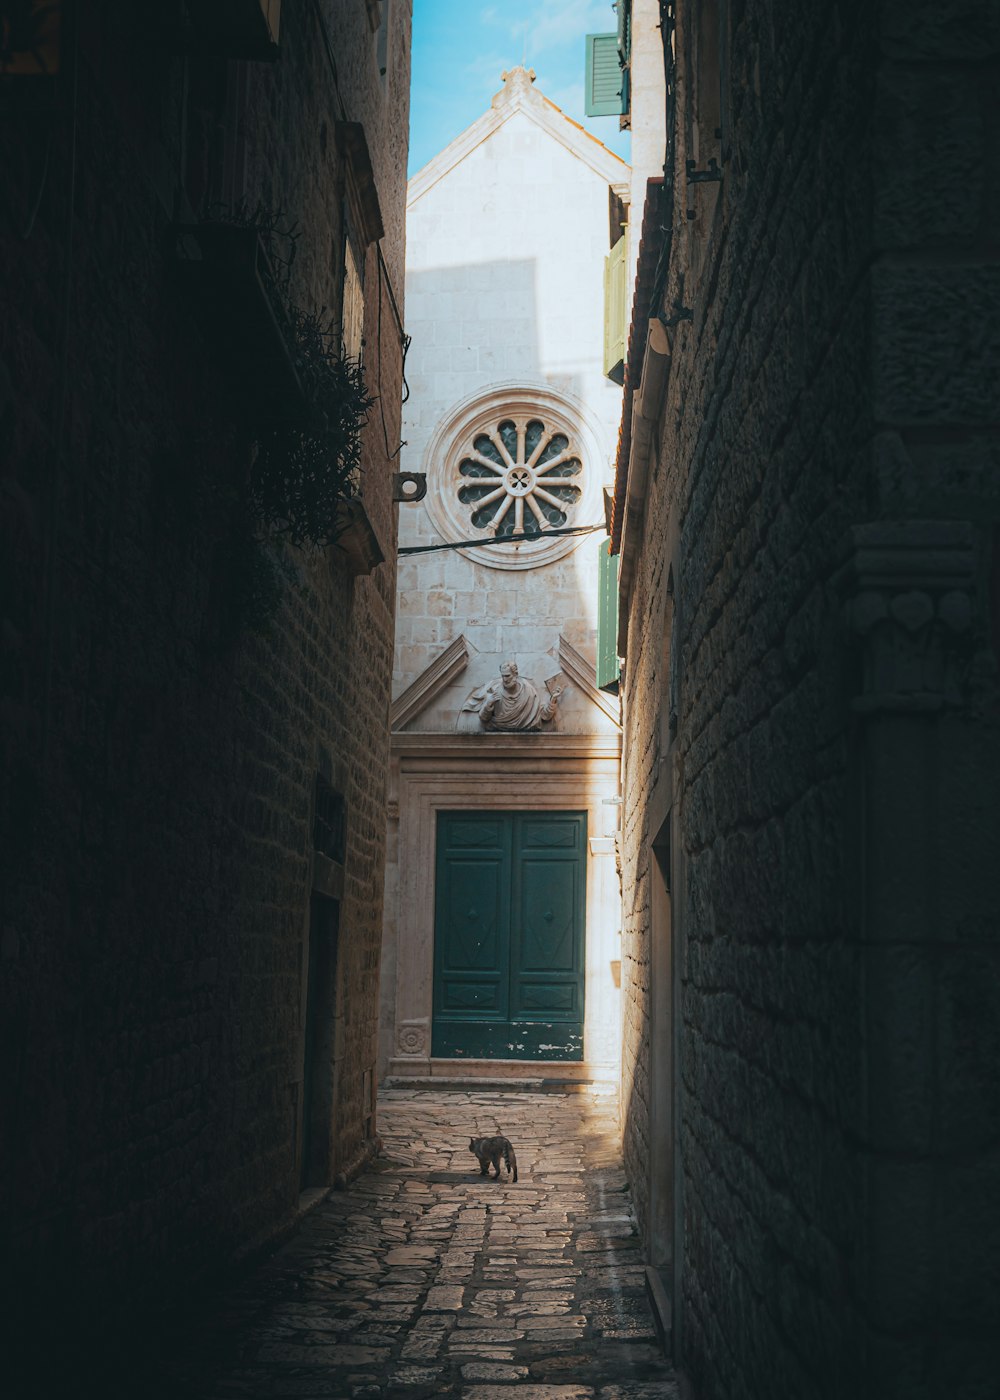 a cat walking down a narrow alley way